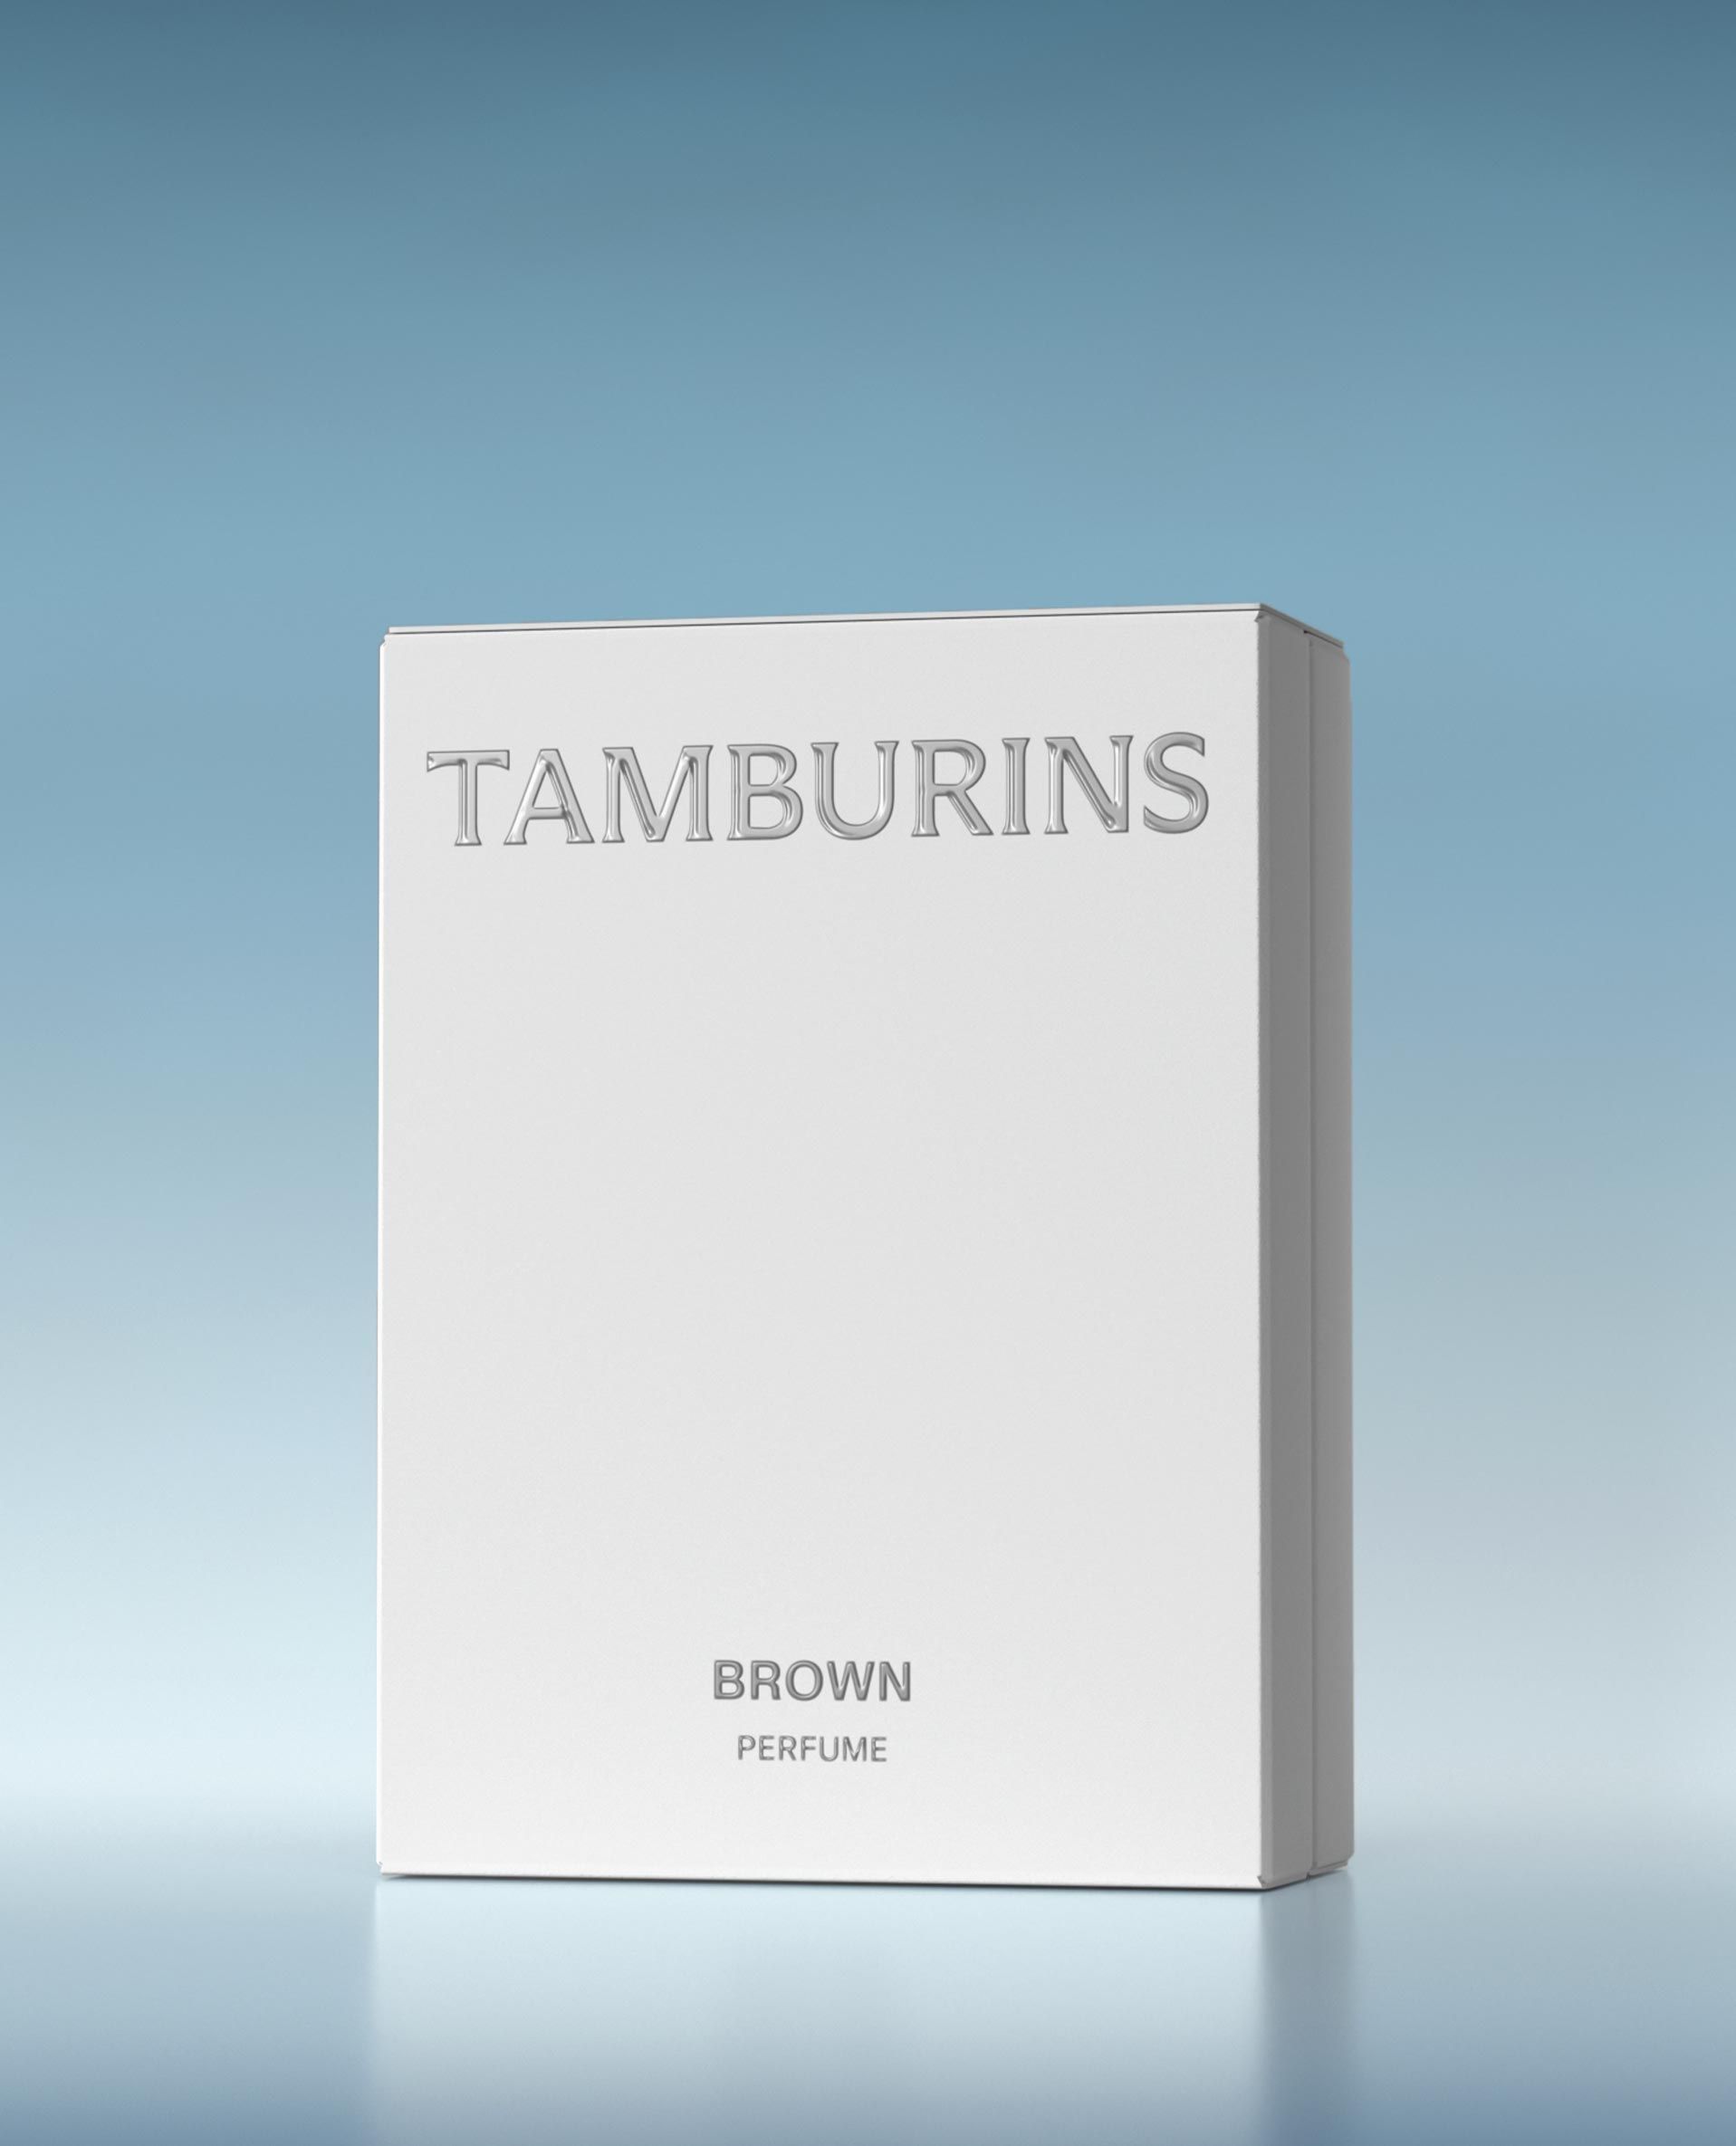 TAMBURINS PERFUME BROWN - 50mL | TAMBURINS / PERFUME